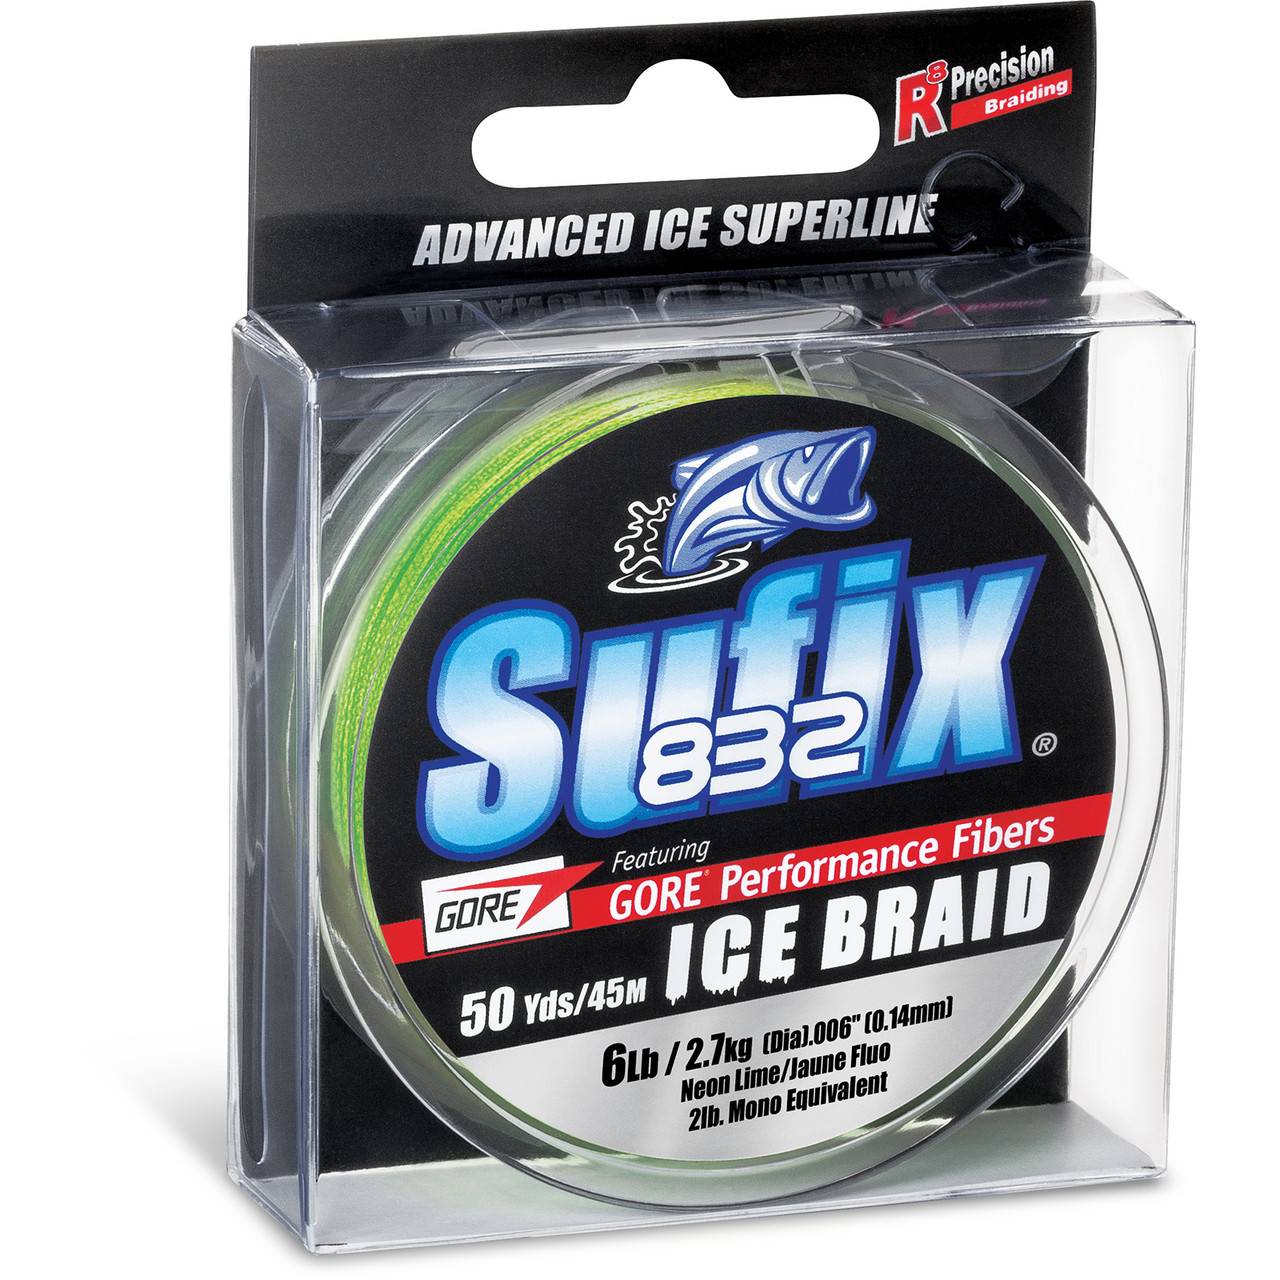 Sufix 832 Ice Braid 10 lb Ghost